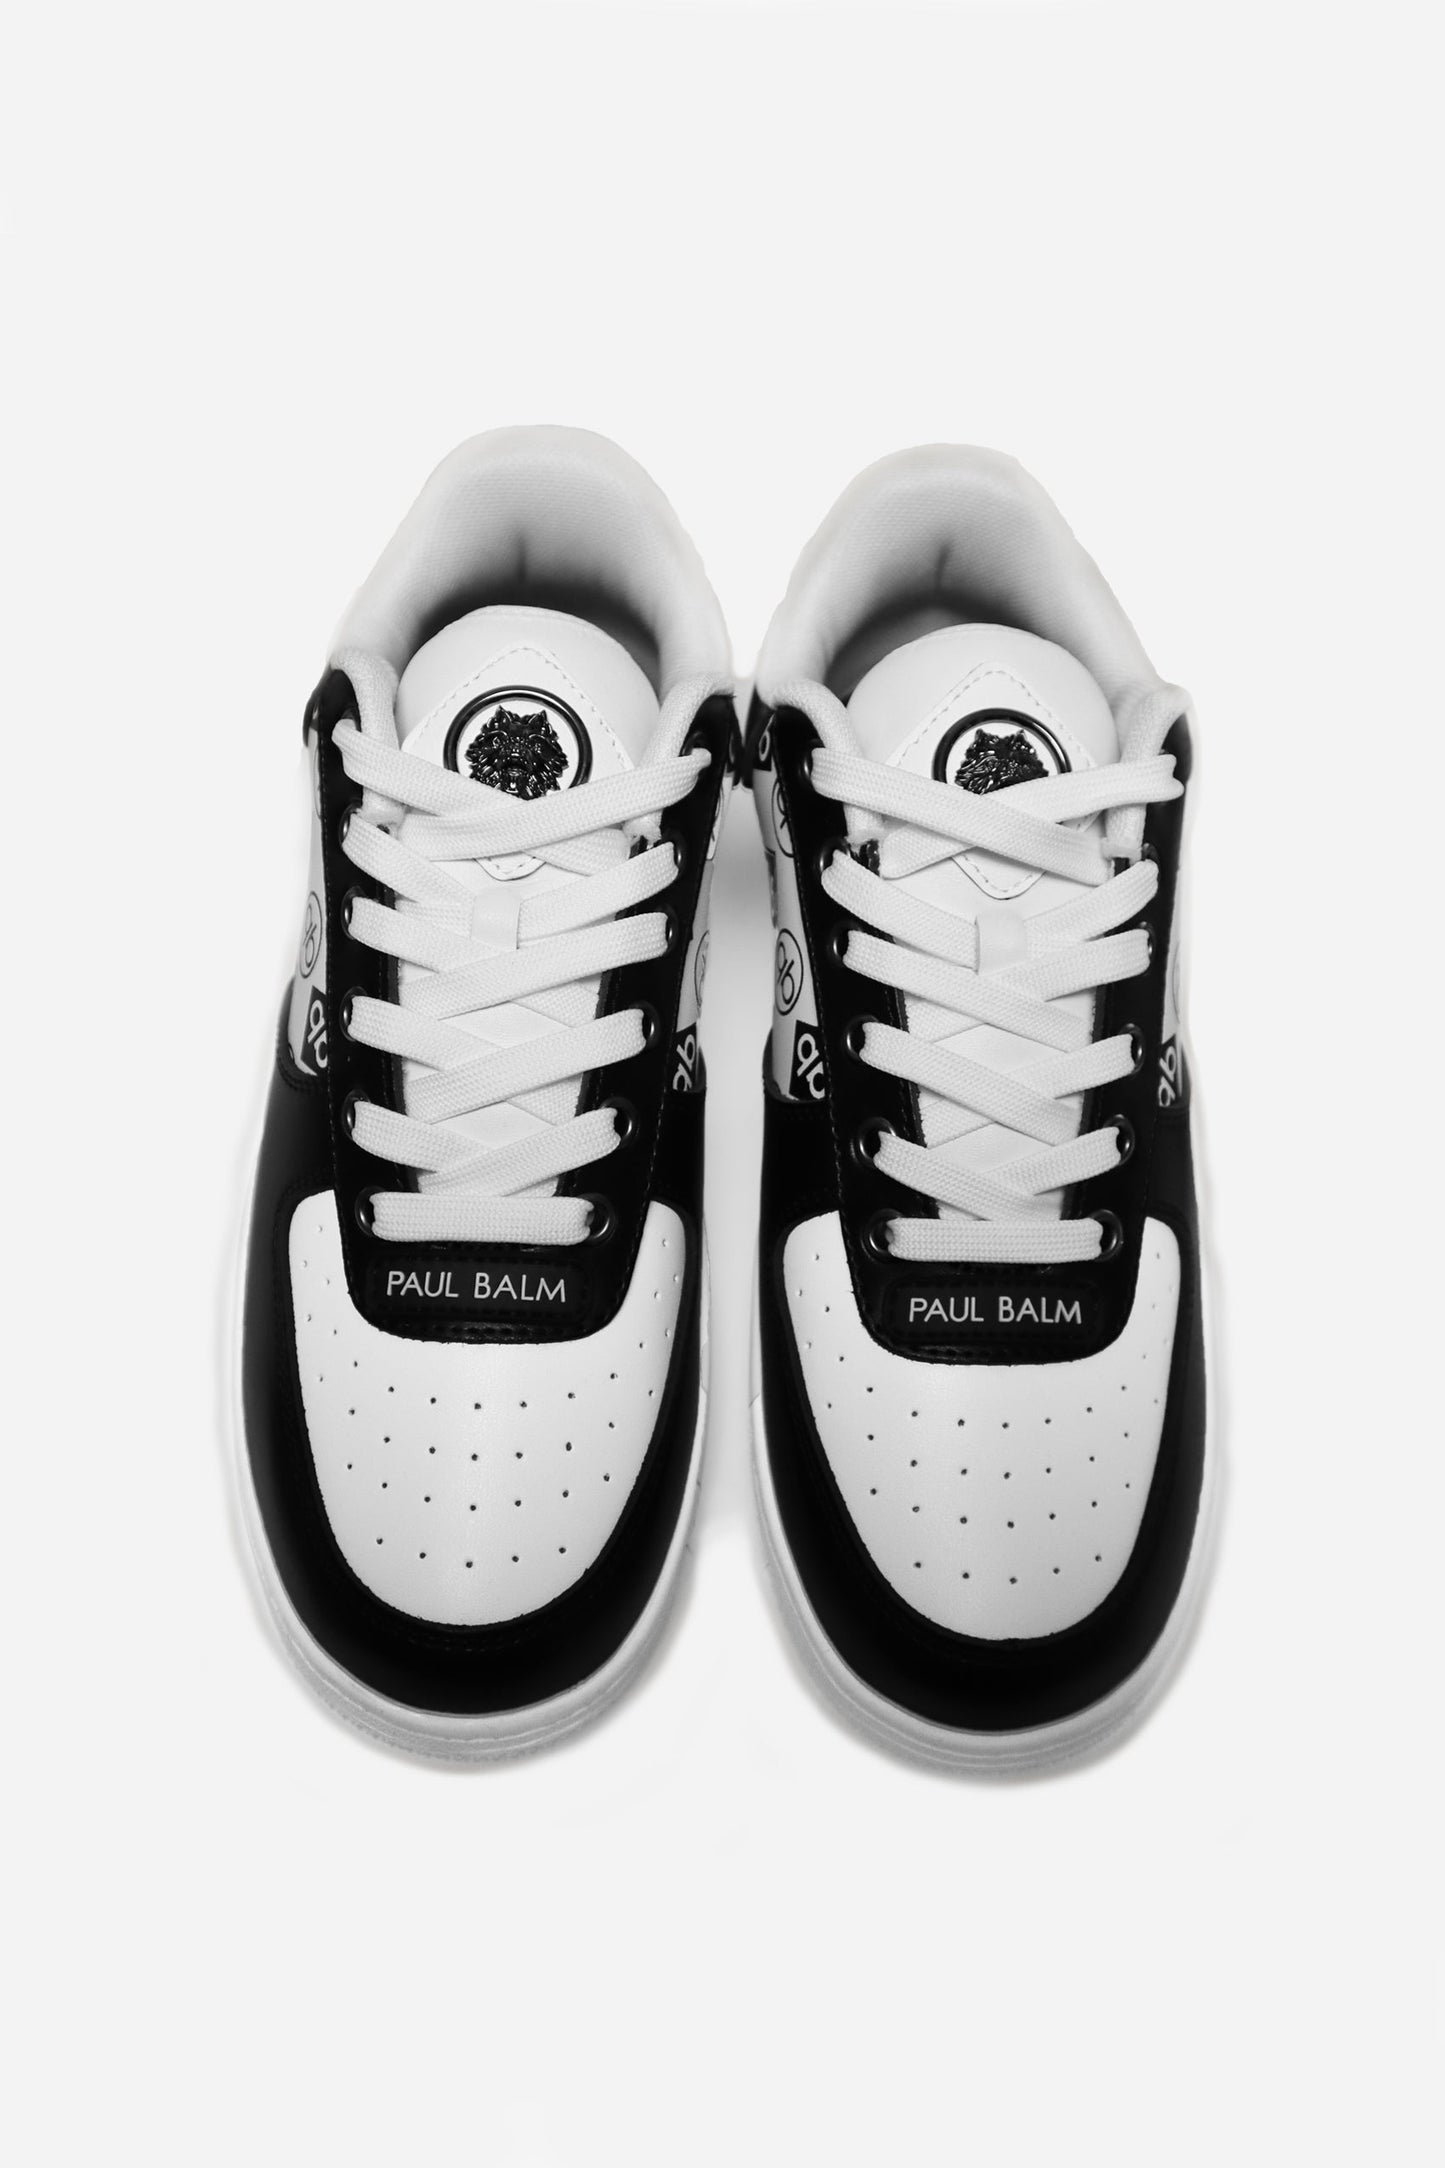 PAUL BALM Leder-Sneaker mit Monogramm Druck